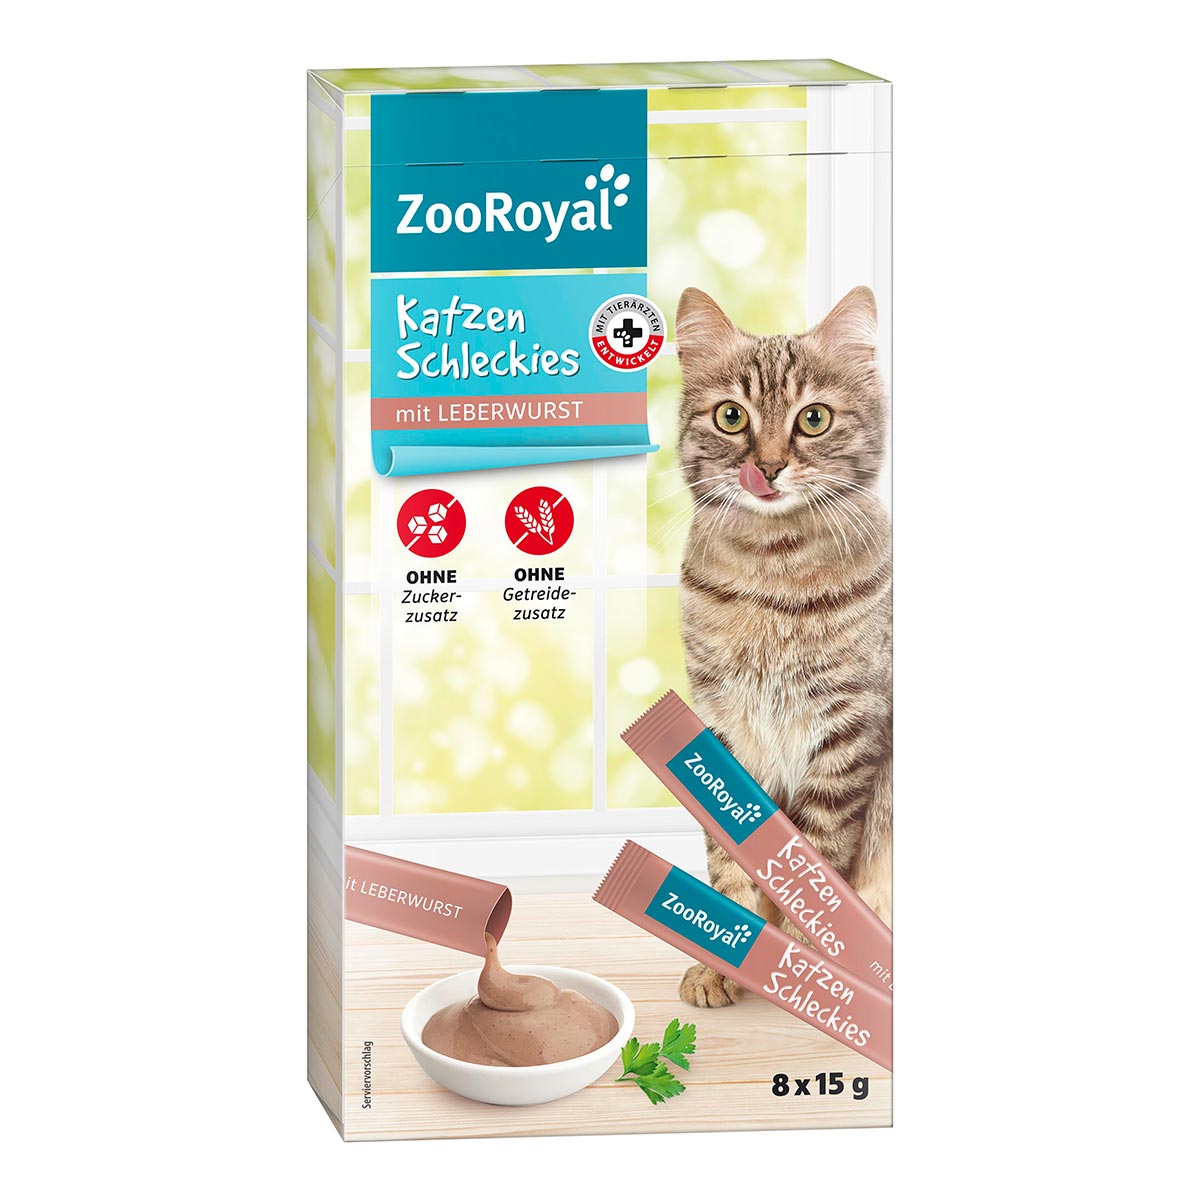 ZooRoyal Katzenschleckies Leberwurst 8x15g